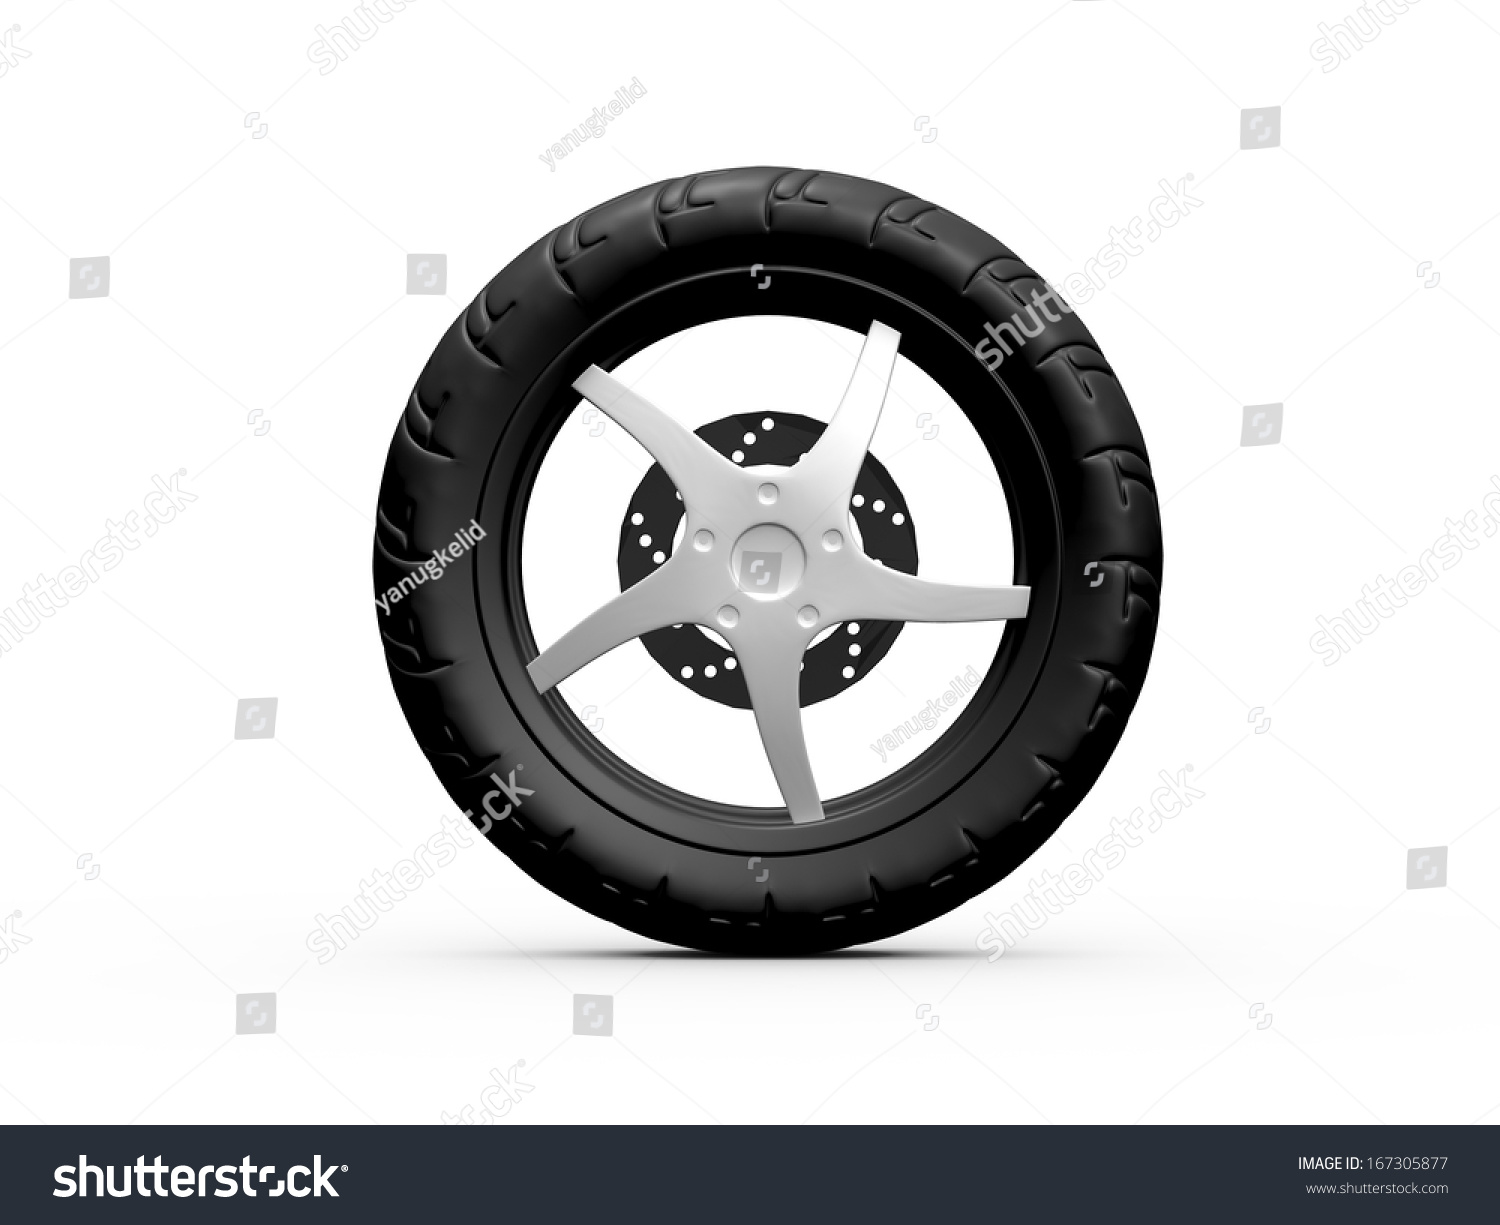 single tire motorcycle